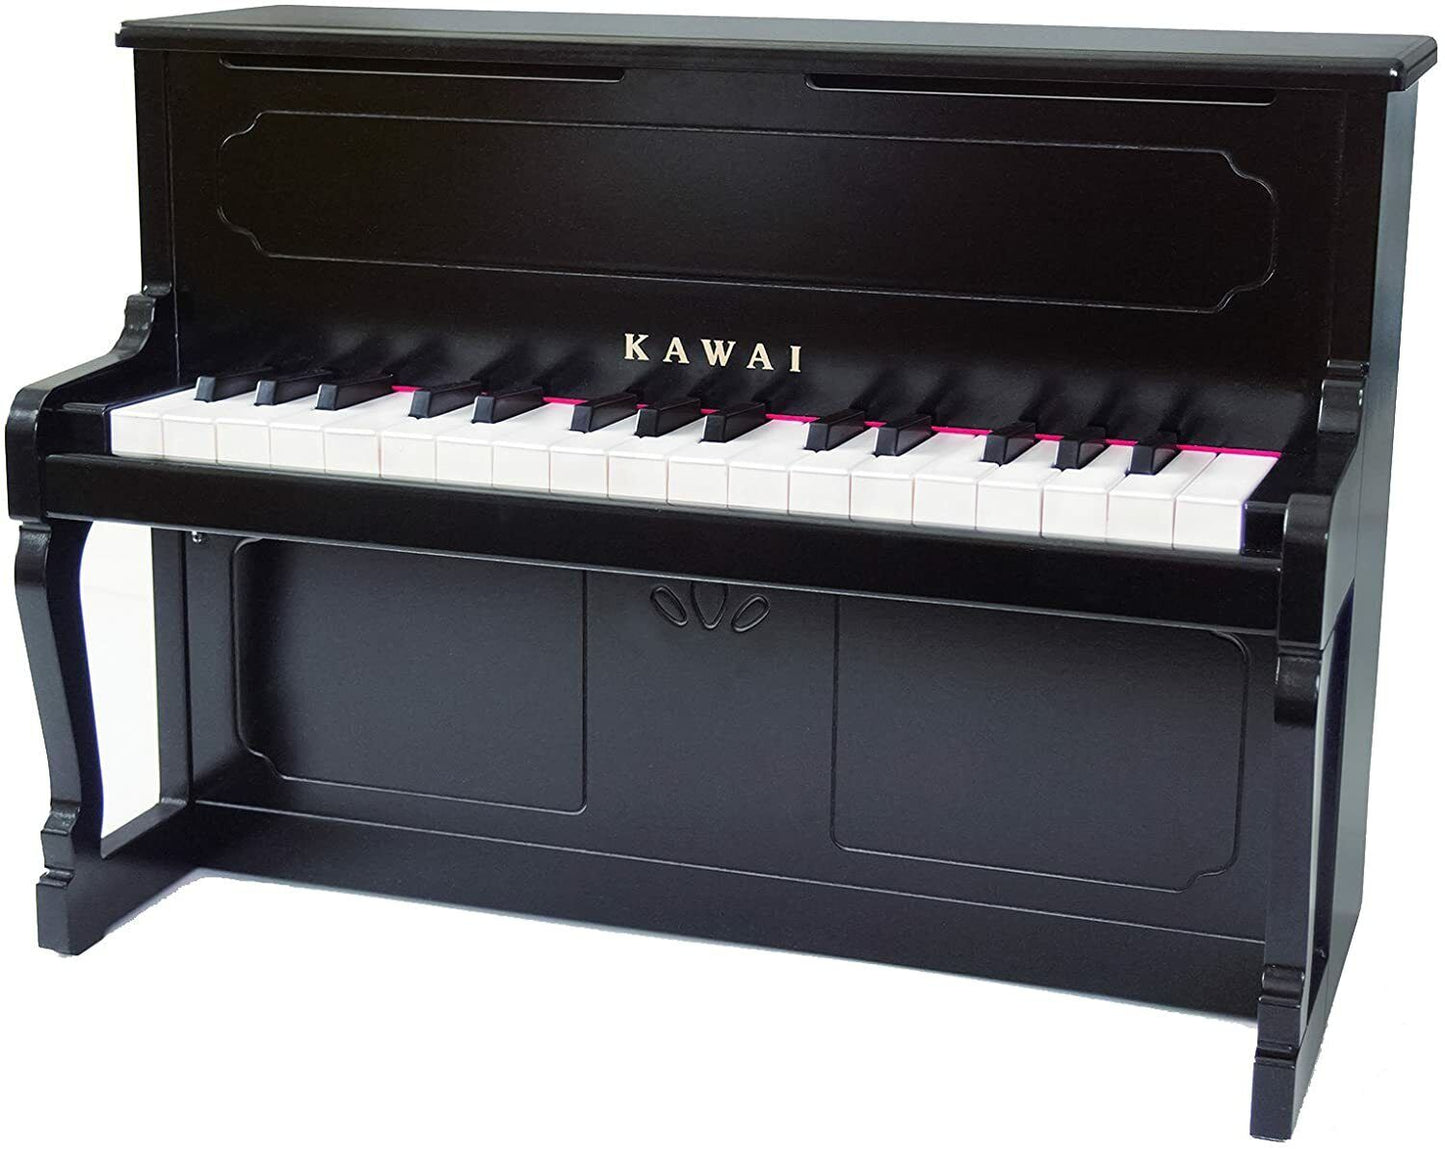 KAWAI upright piano black 32 Keys  Baby Toy Mini Piano 8.69 Pounds made in japan